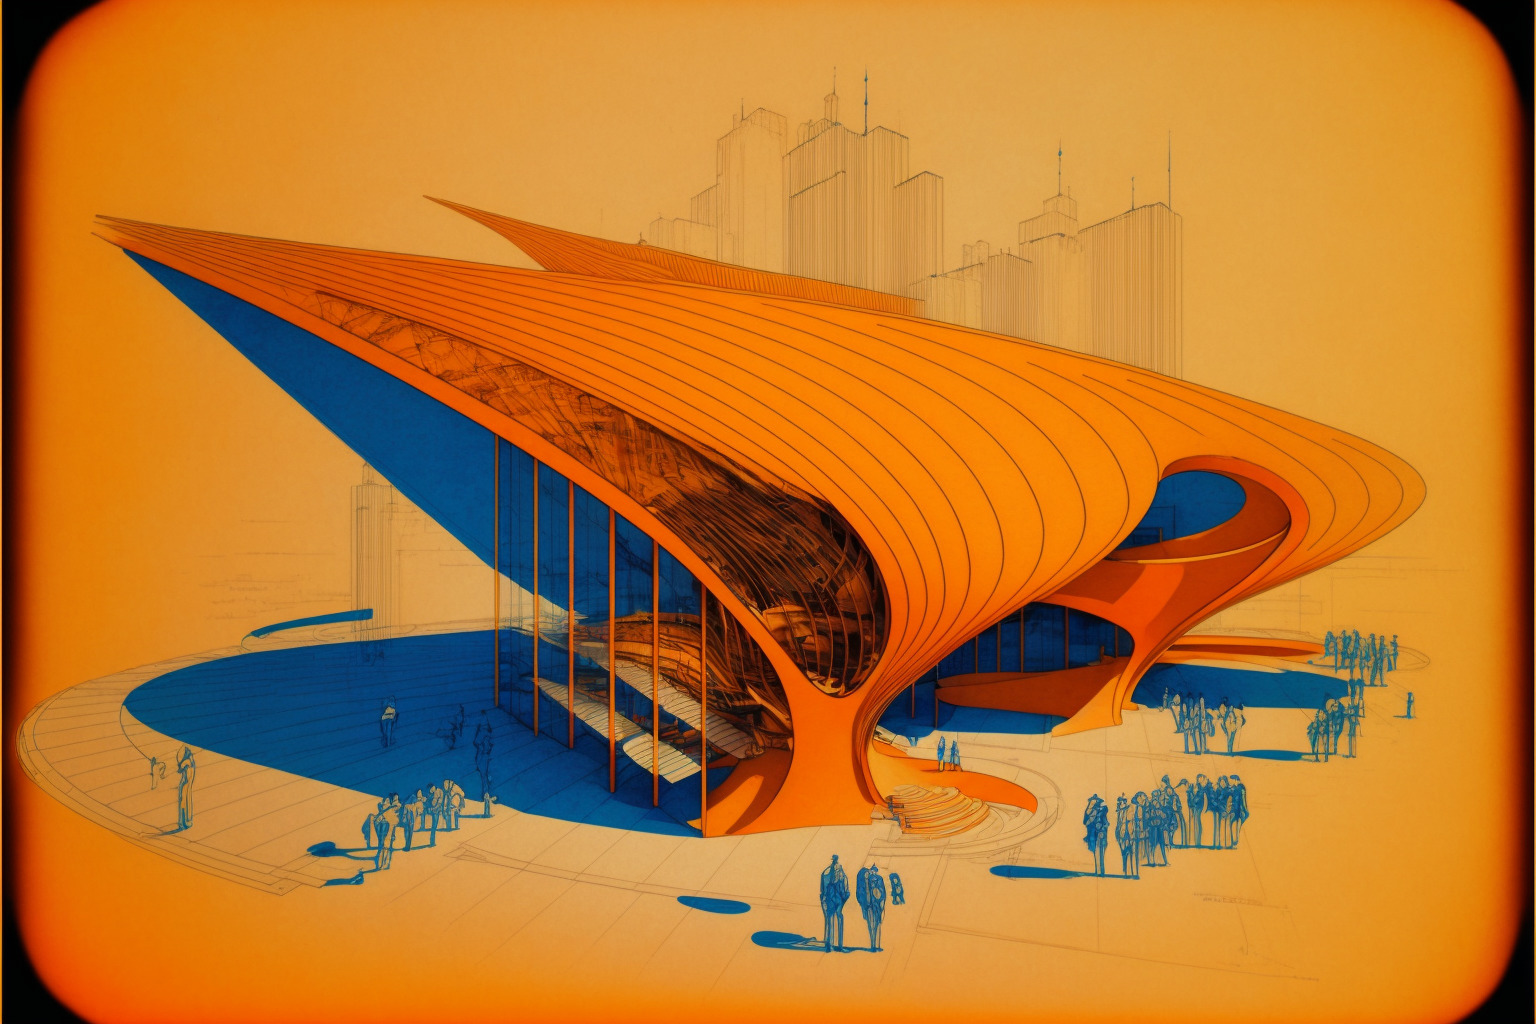 AI-generated image of an orange futuristic building